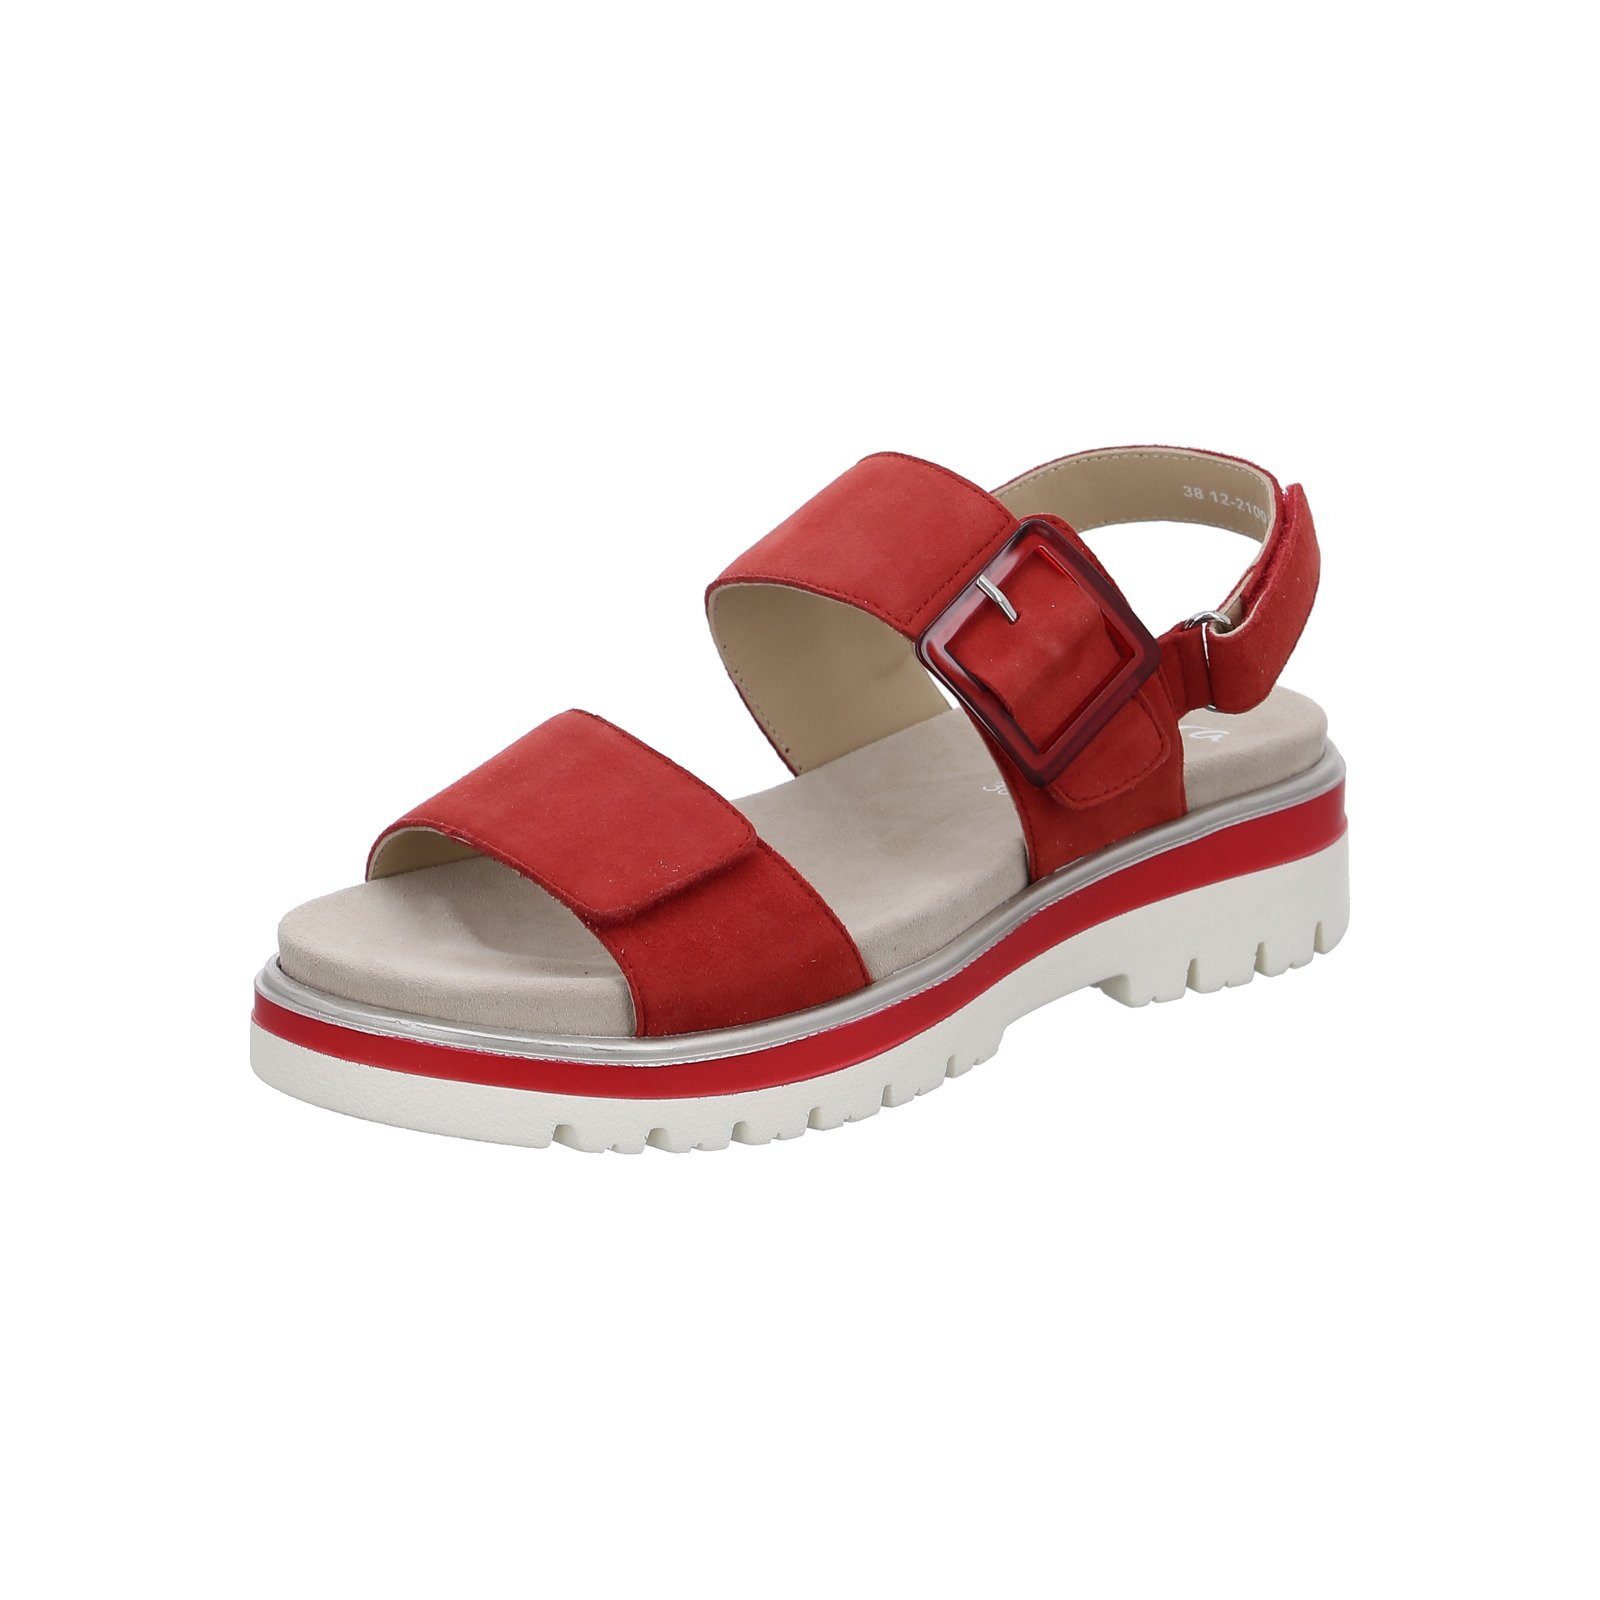 Ara Malaga - Damen Schuhe Sandalette rot